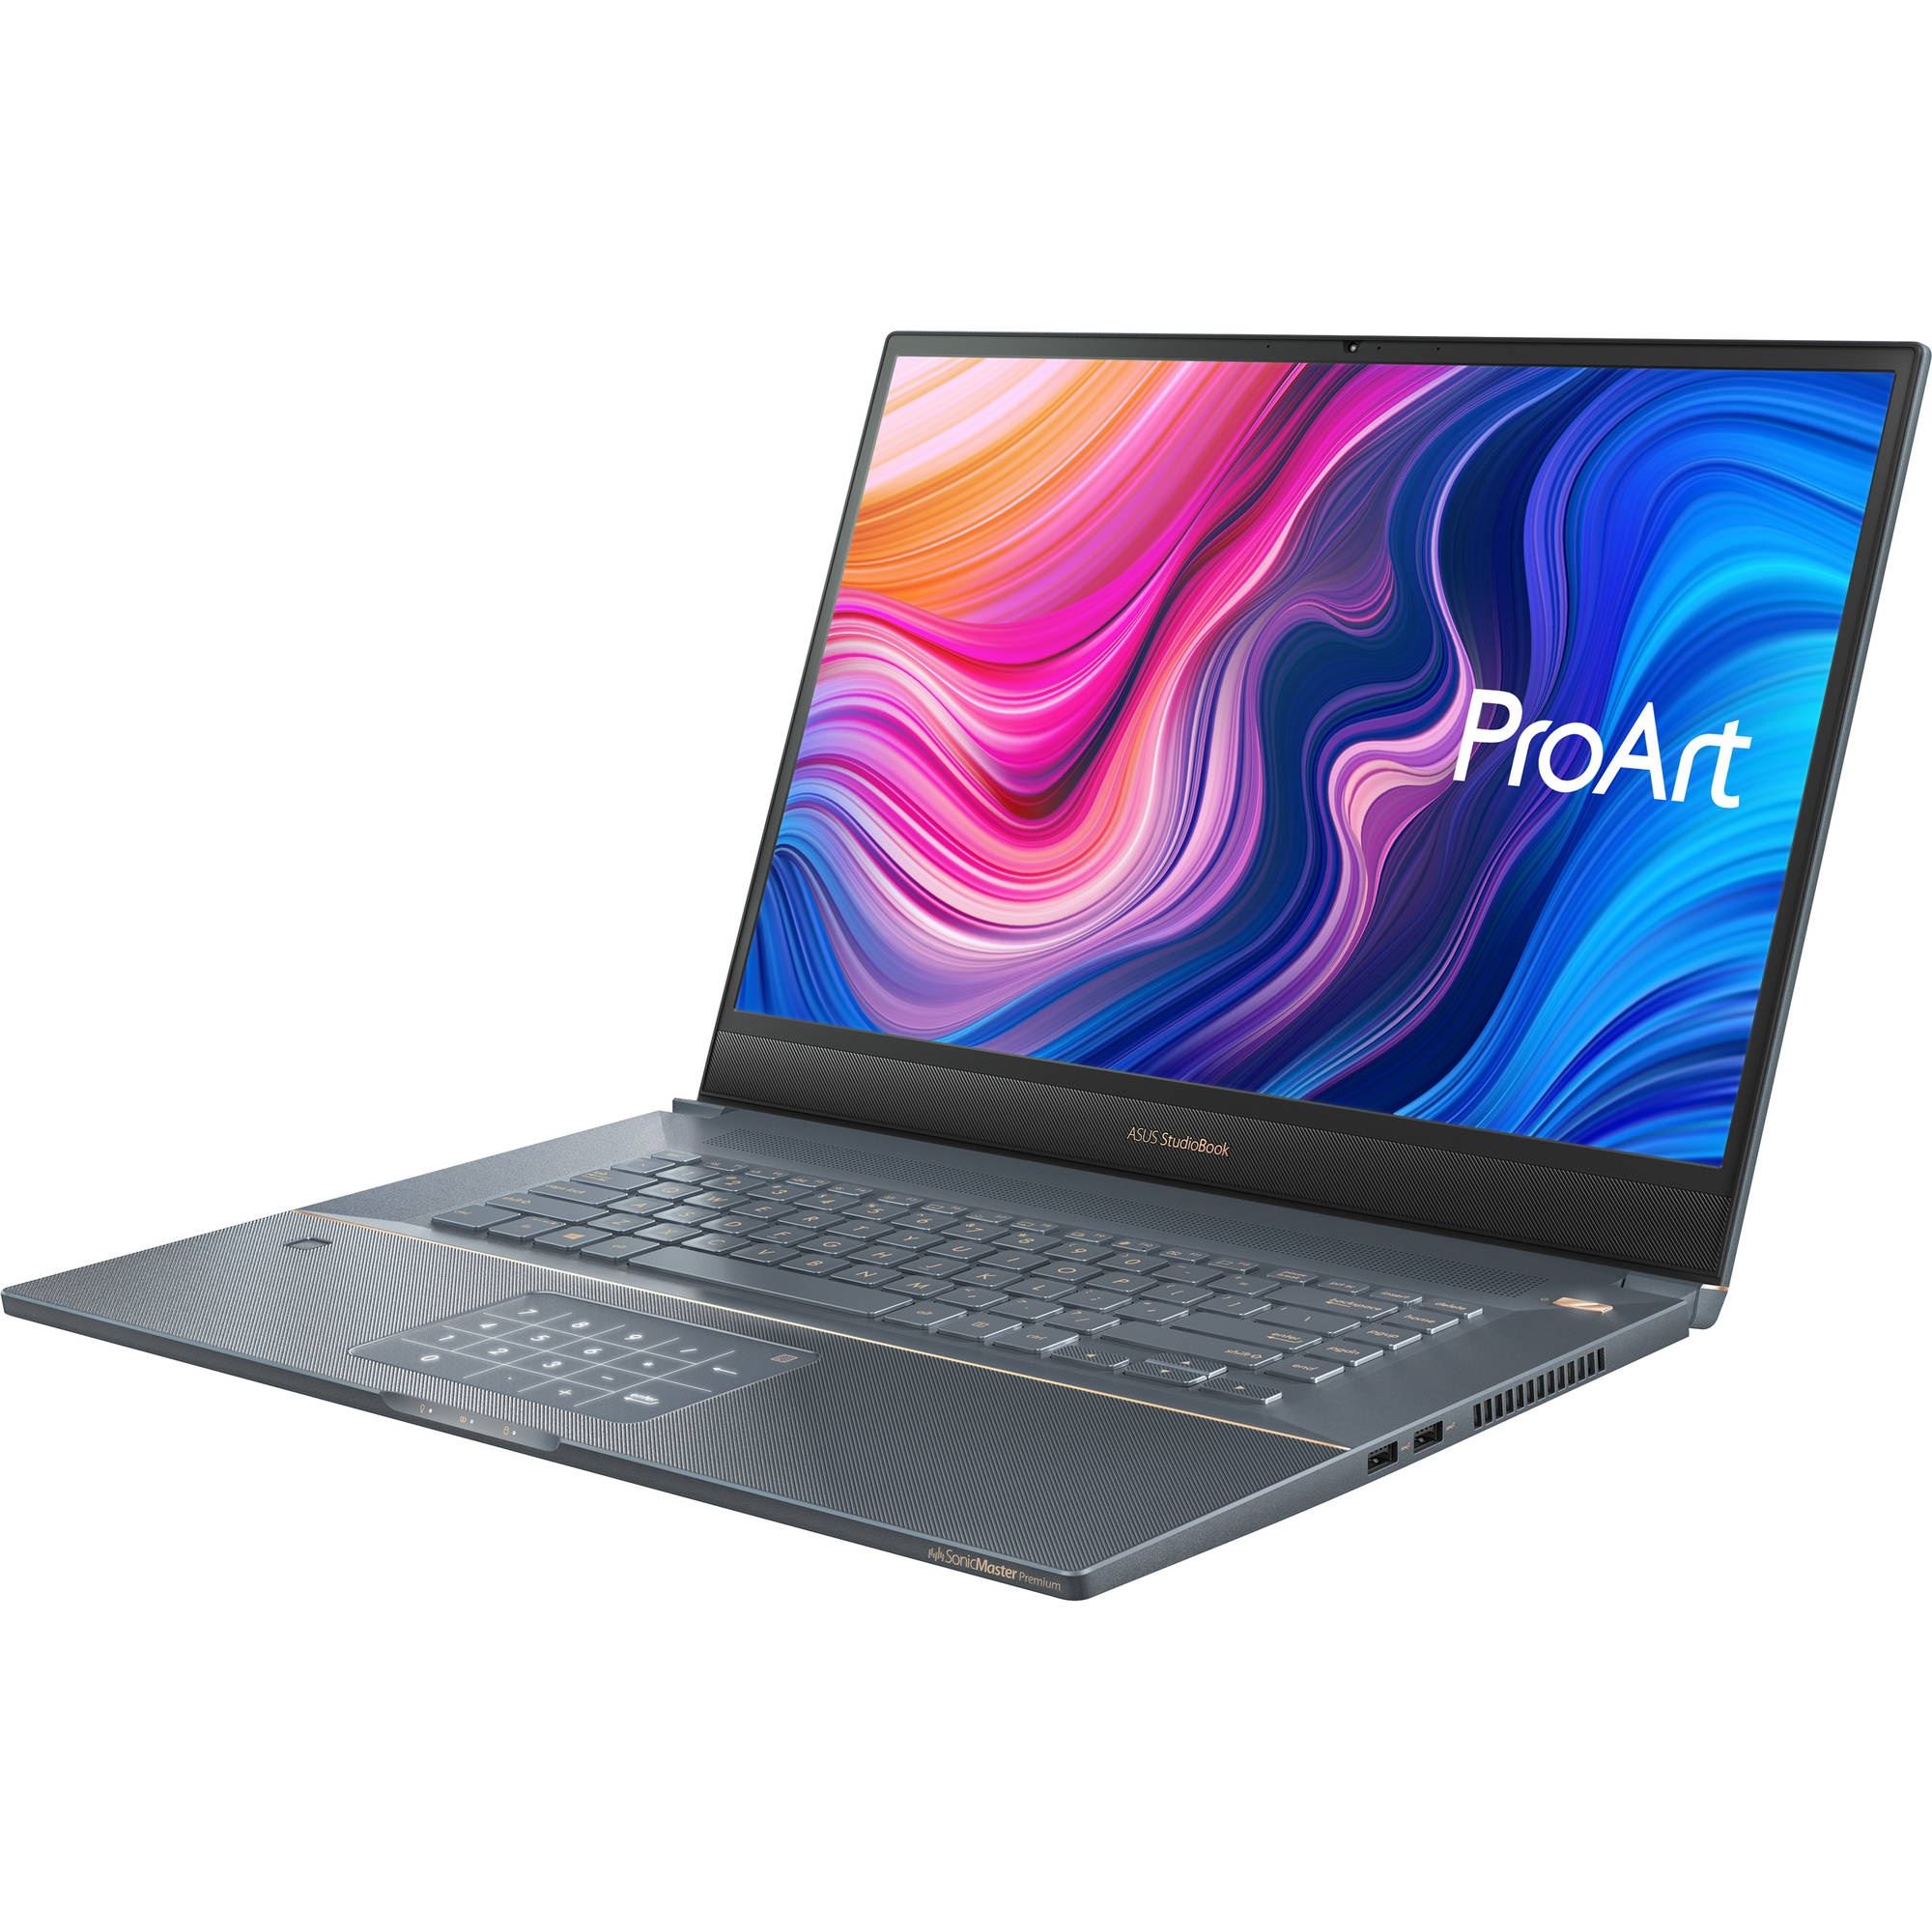 Asus-ProArt-StudioBook-Pro-17-W700G1T-4